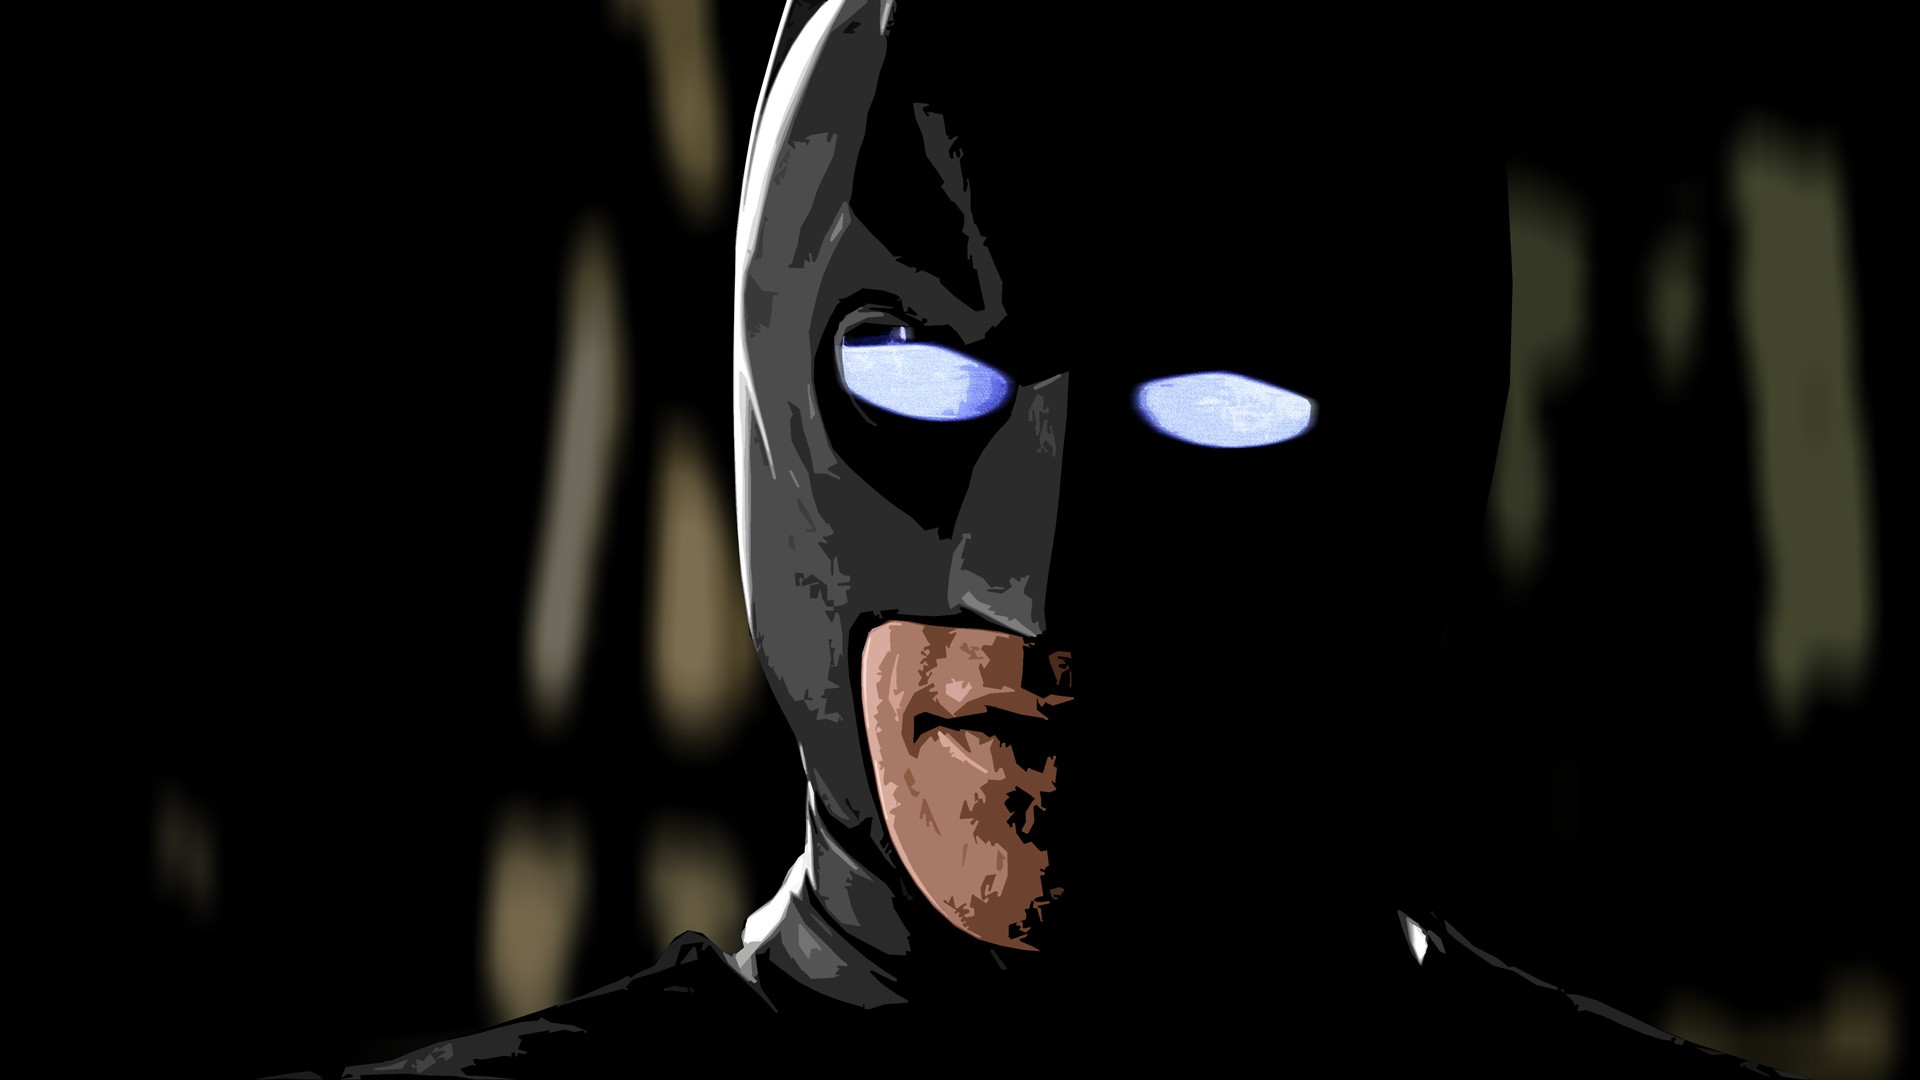 General 1920x1080 movies Batman The Dark Knight MessenjahMatt artwork Christian Bale actor superhero DC Comics Warner Brothers Christopher Nolan